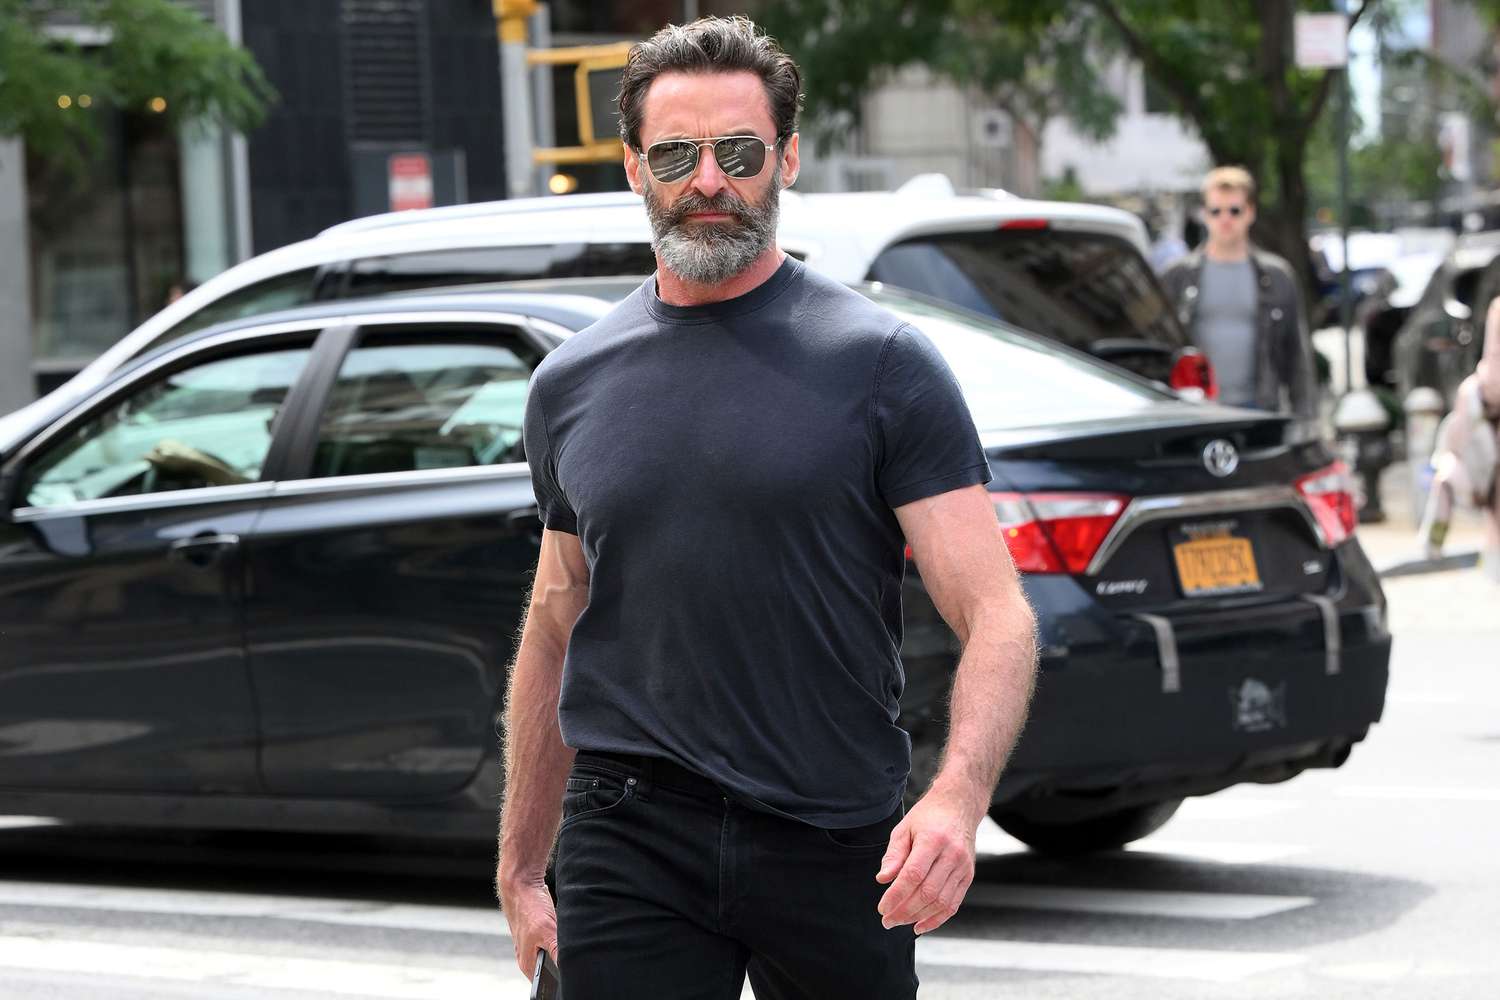 Hugh Jackman wearing a black shirt and sunglasses